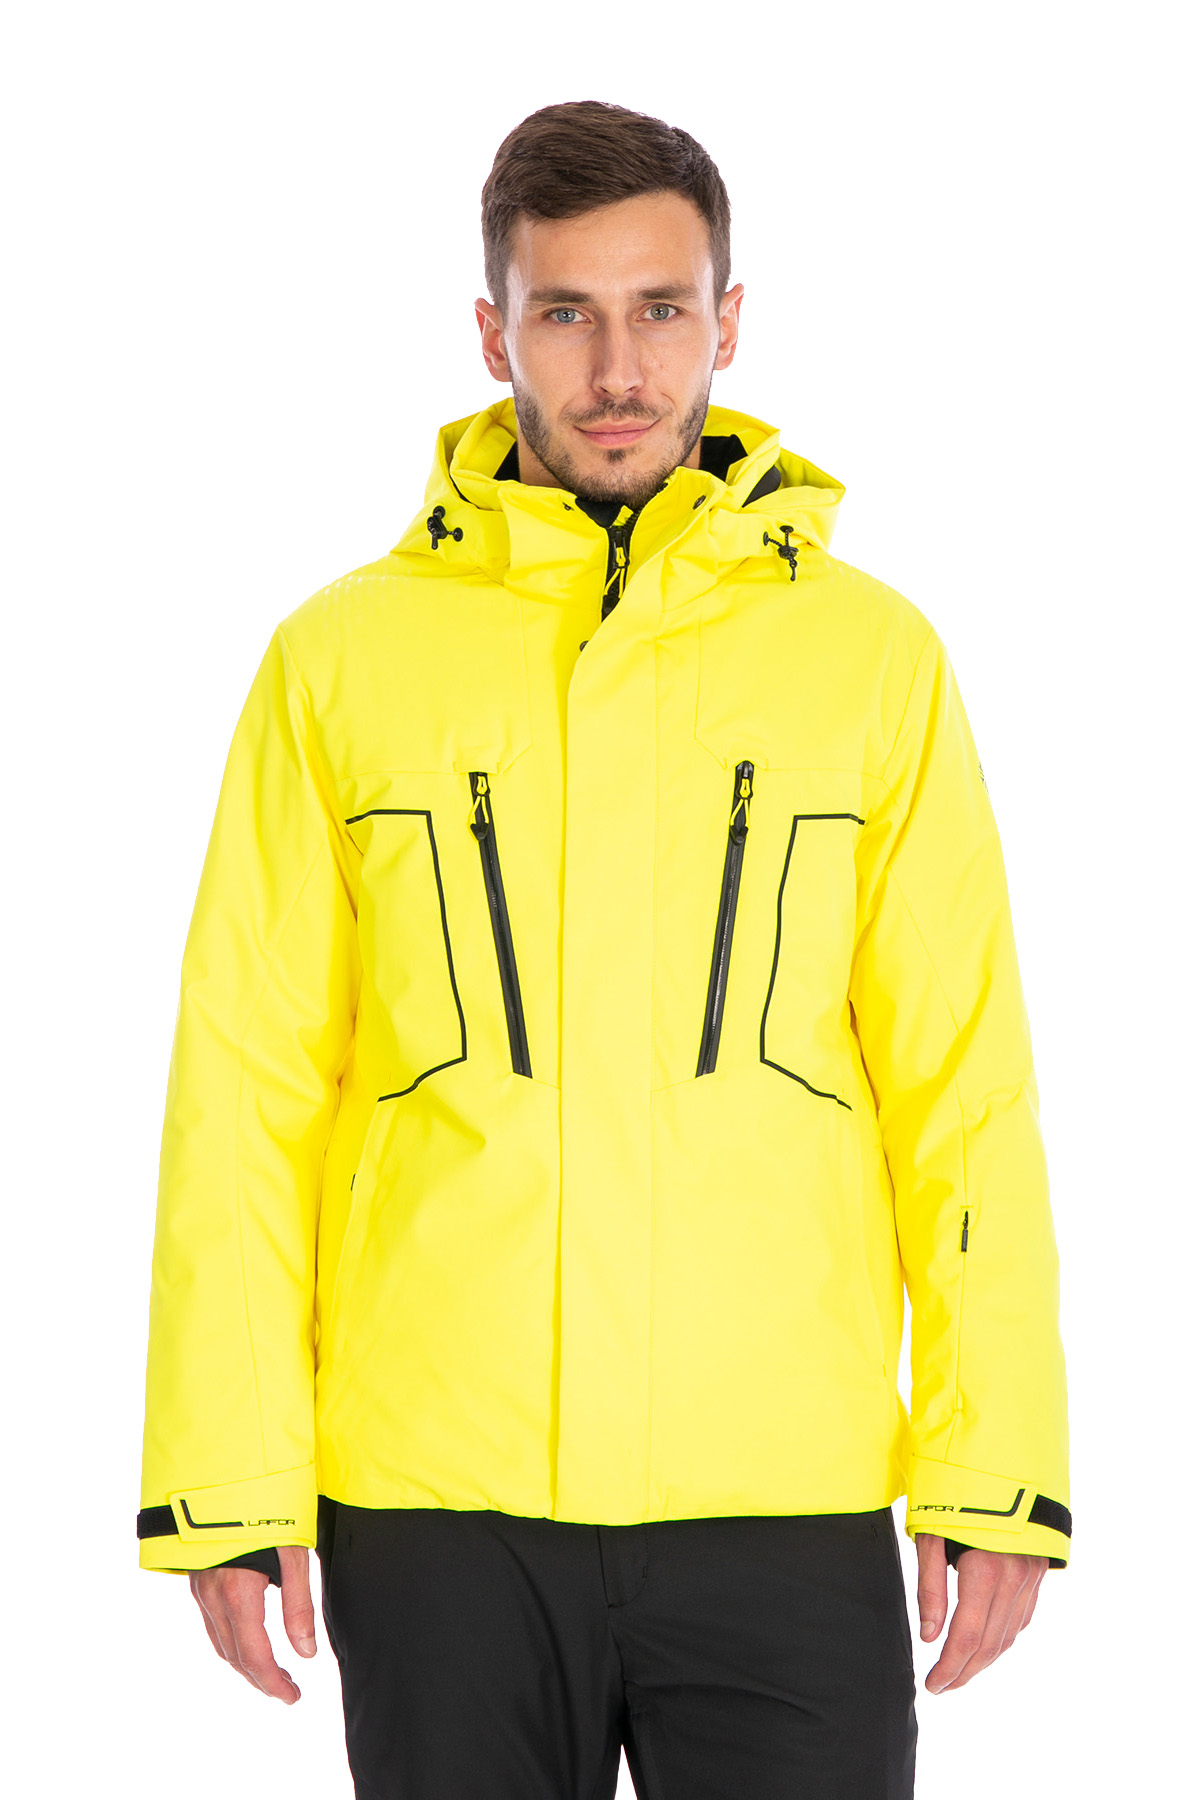 Мужская горнолыжная Куртка Lafor Желтый, 767013 (46, s)